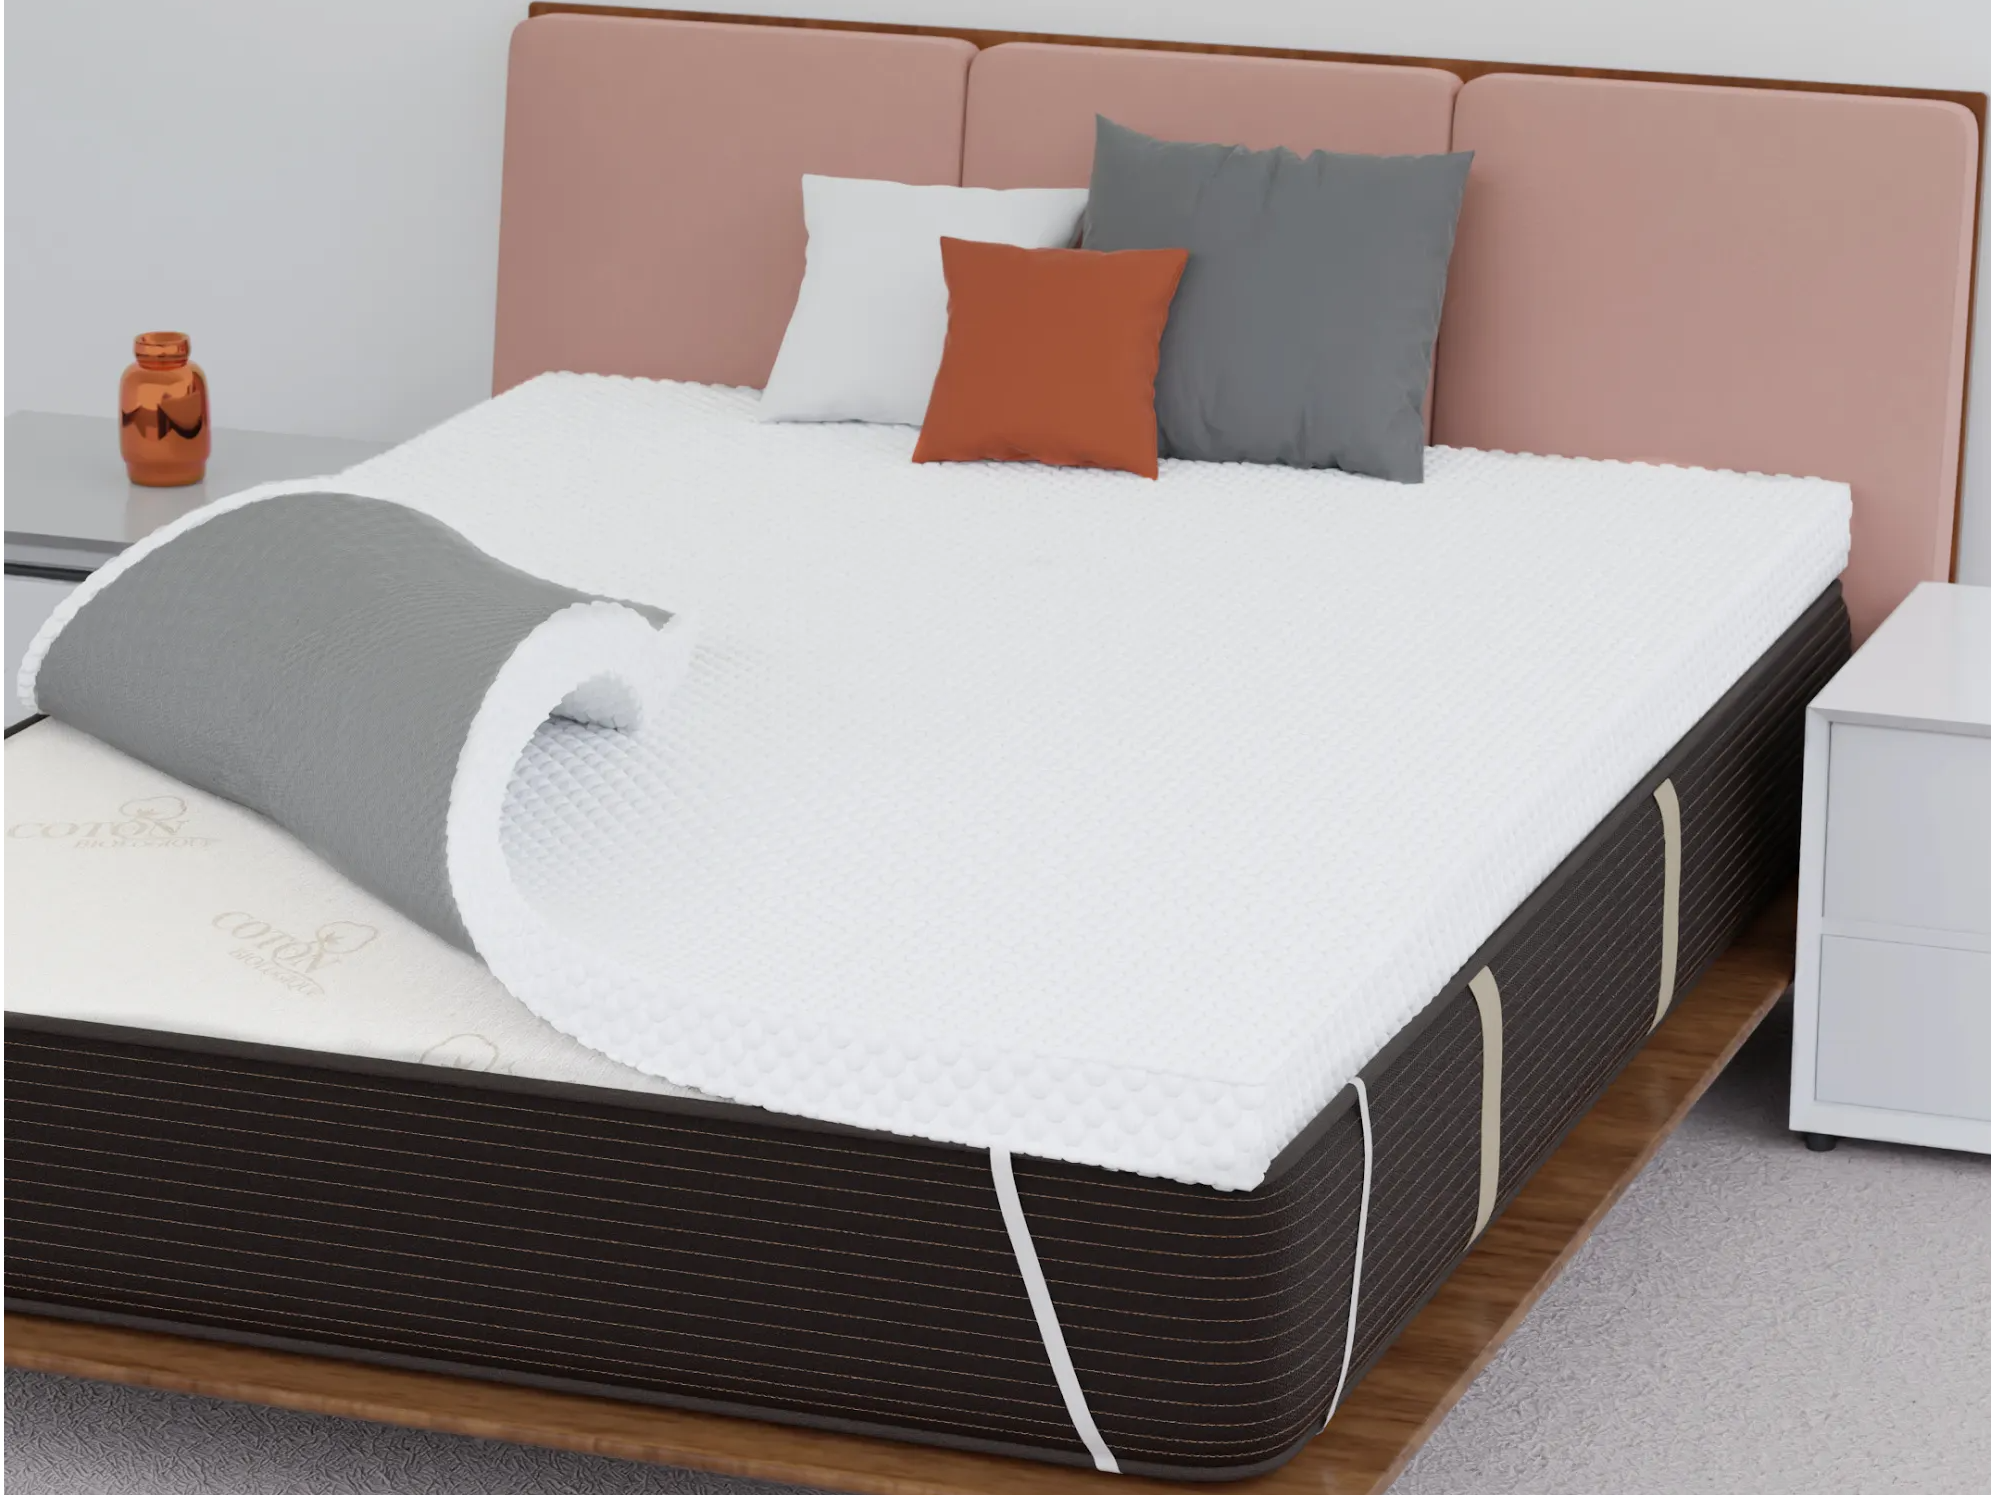 CopperCloud Hybrid mattress with a CopperWave mattress topper on a platform bed.